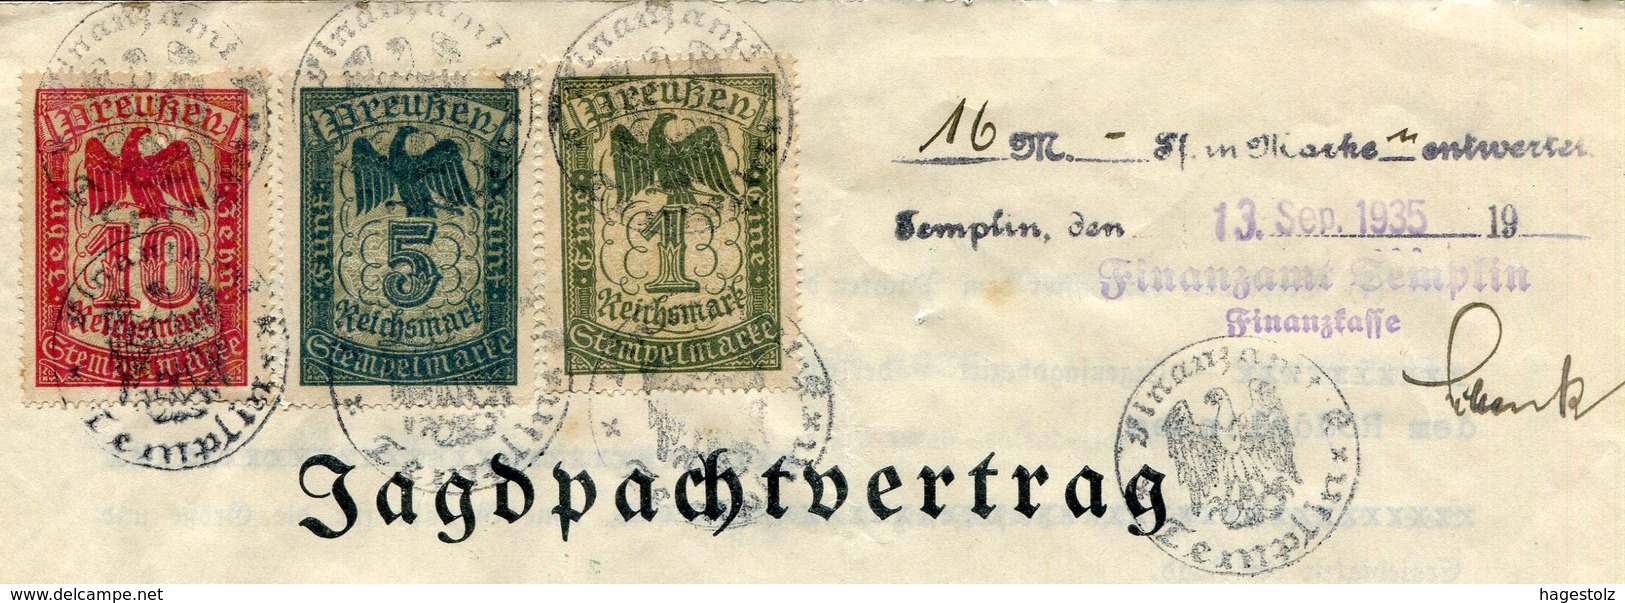 HUNTING Germany 1935 Templin Revenue 1+5+10 RM Preussen Stempelmarke Fiscal Tax Document Gebührenmarke JAGD Deutschland - Covers & Documents